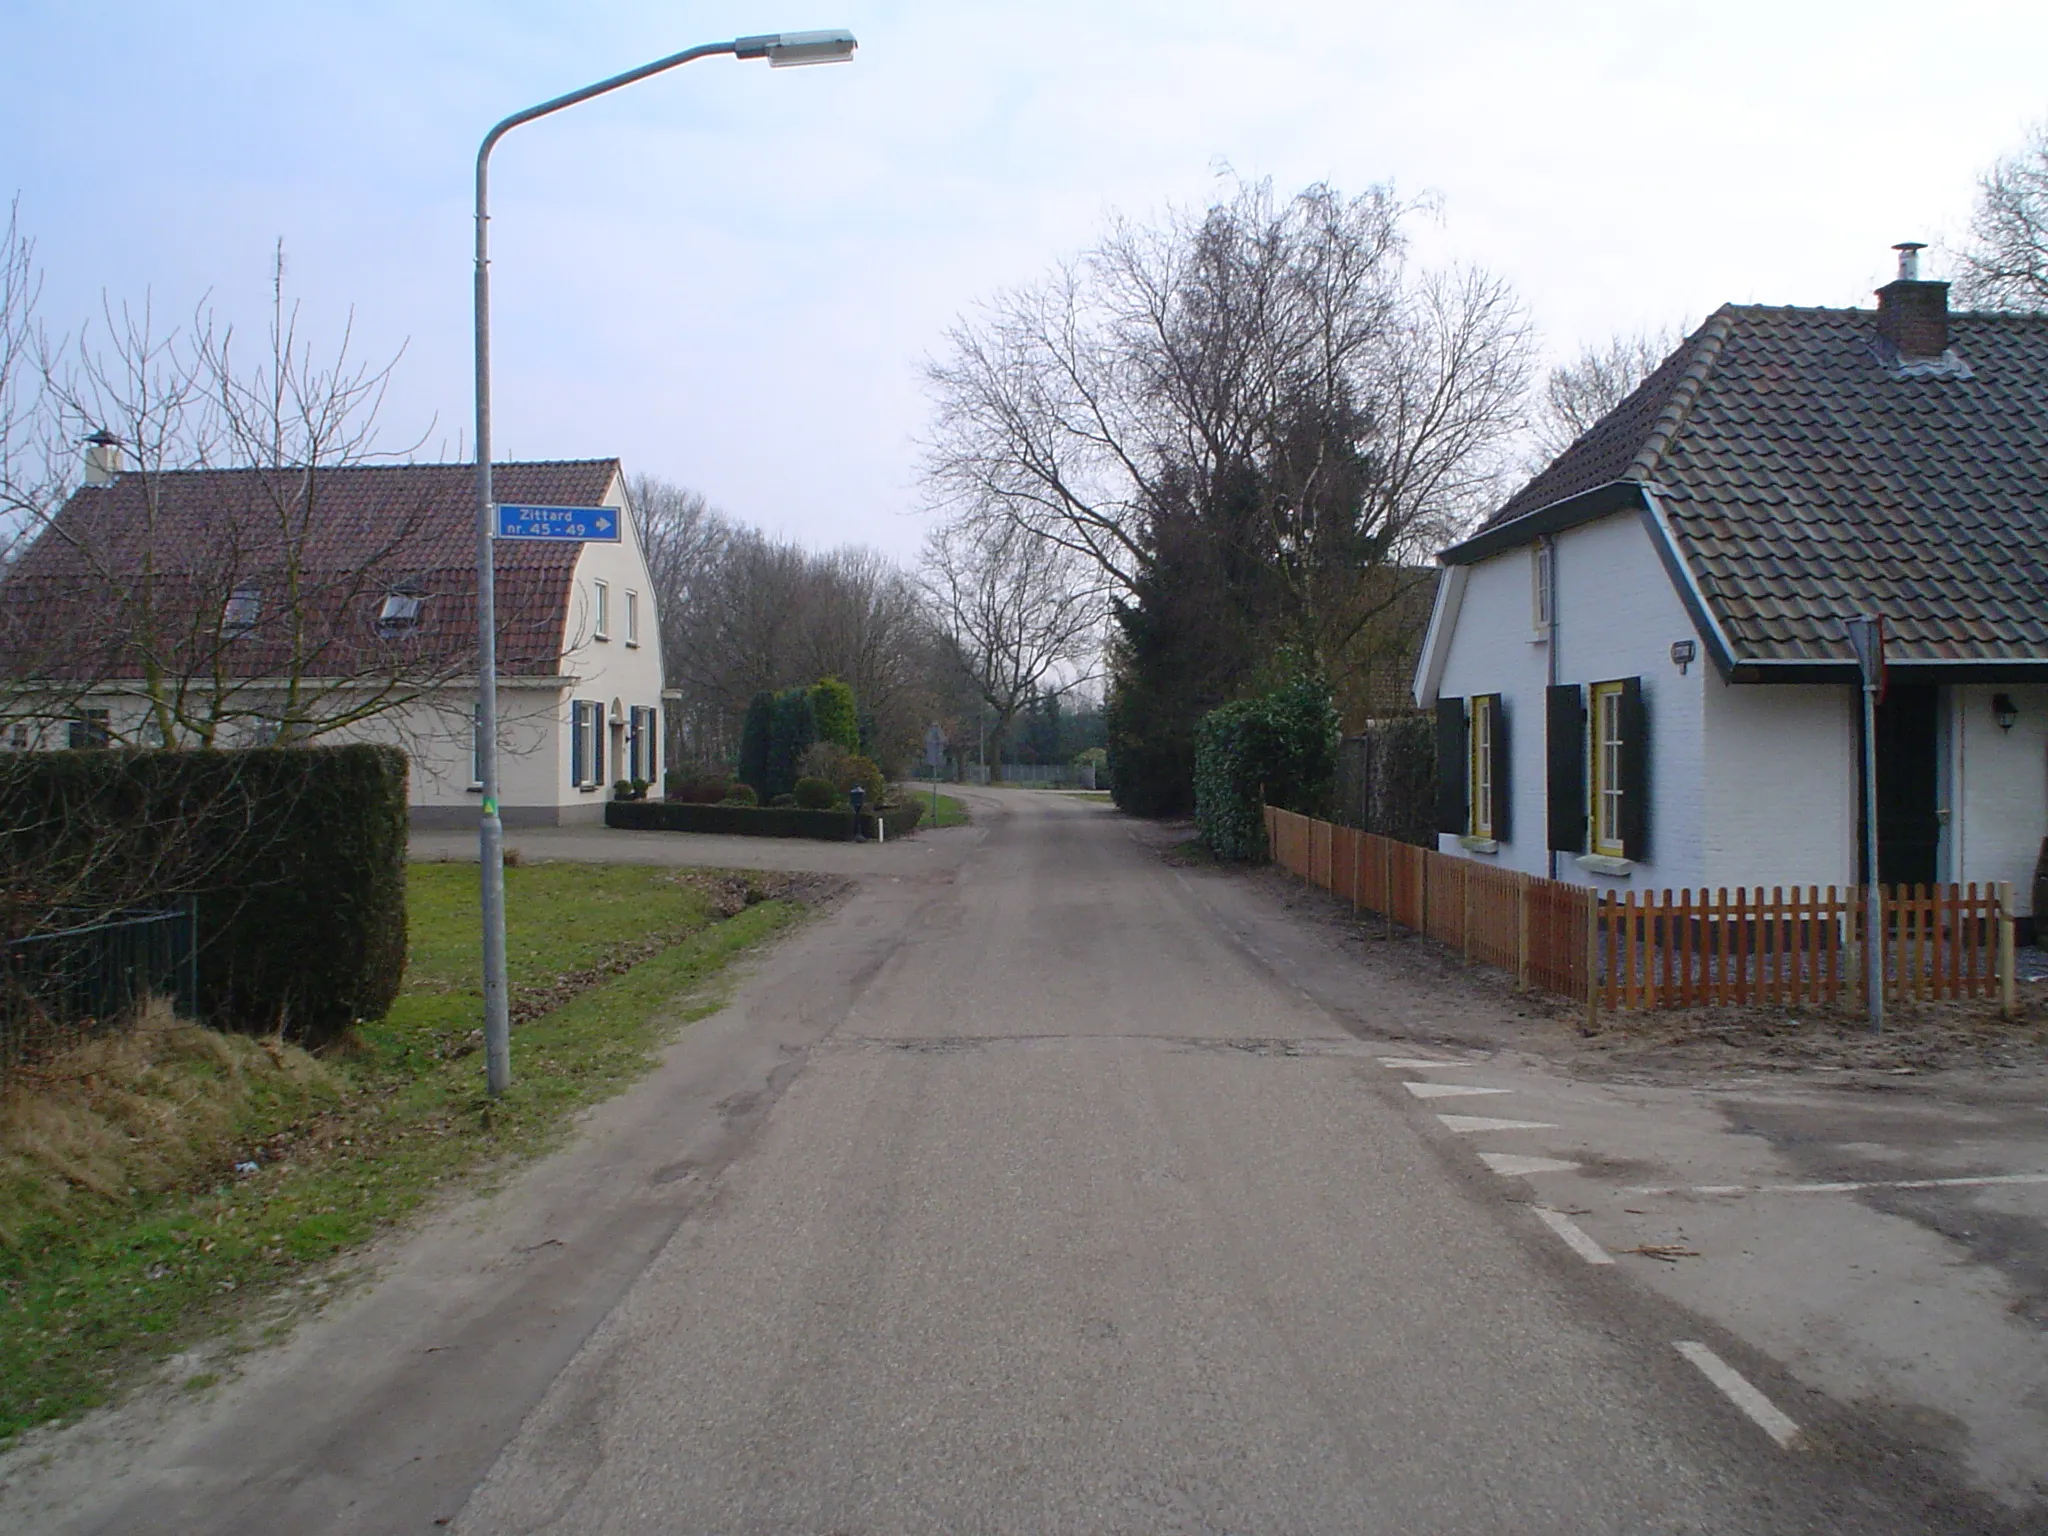 Photo showing: Farmhouses in the hamlet Zittard, near Veldhoven, the Netherlands.